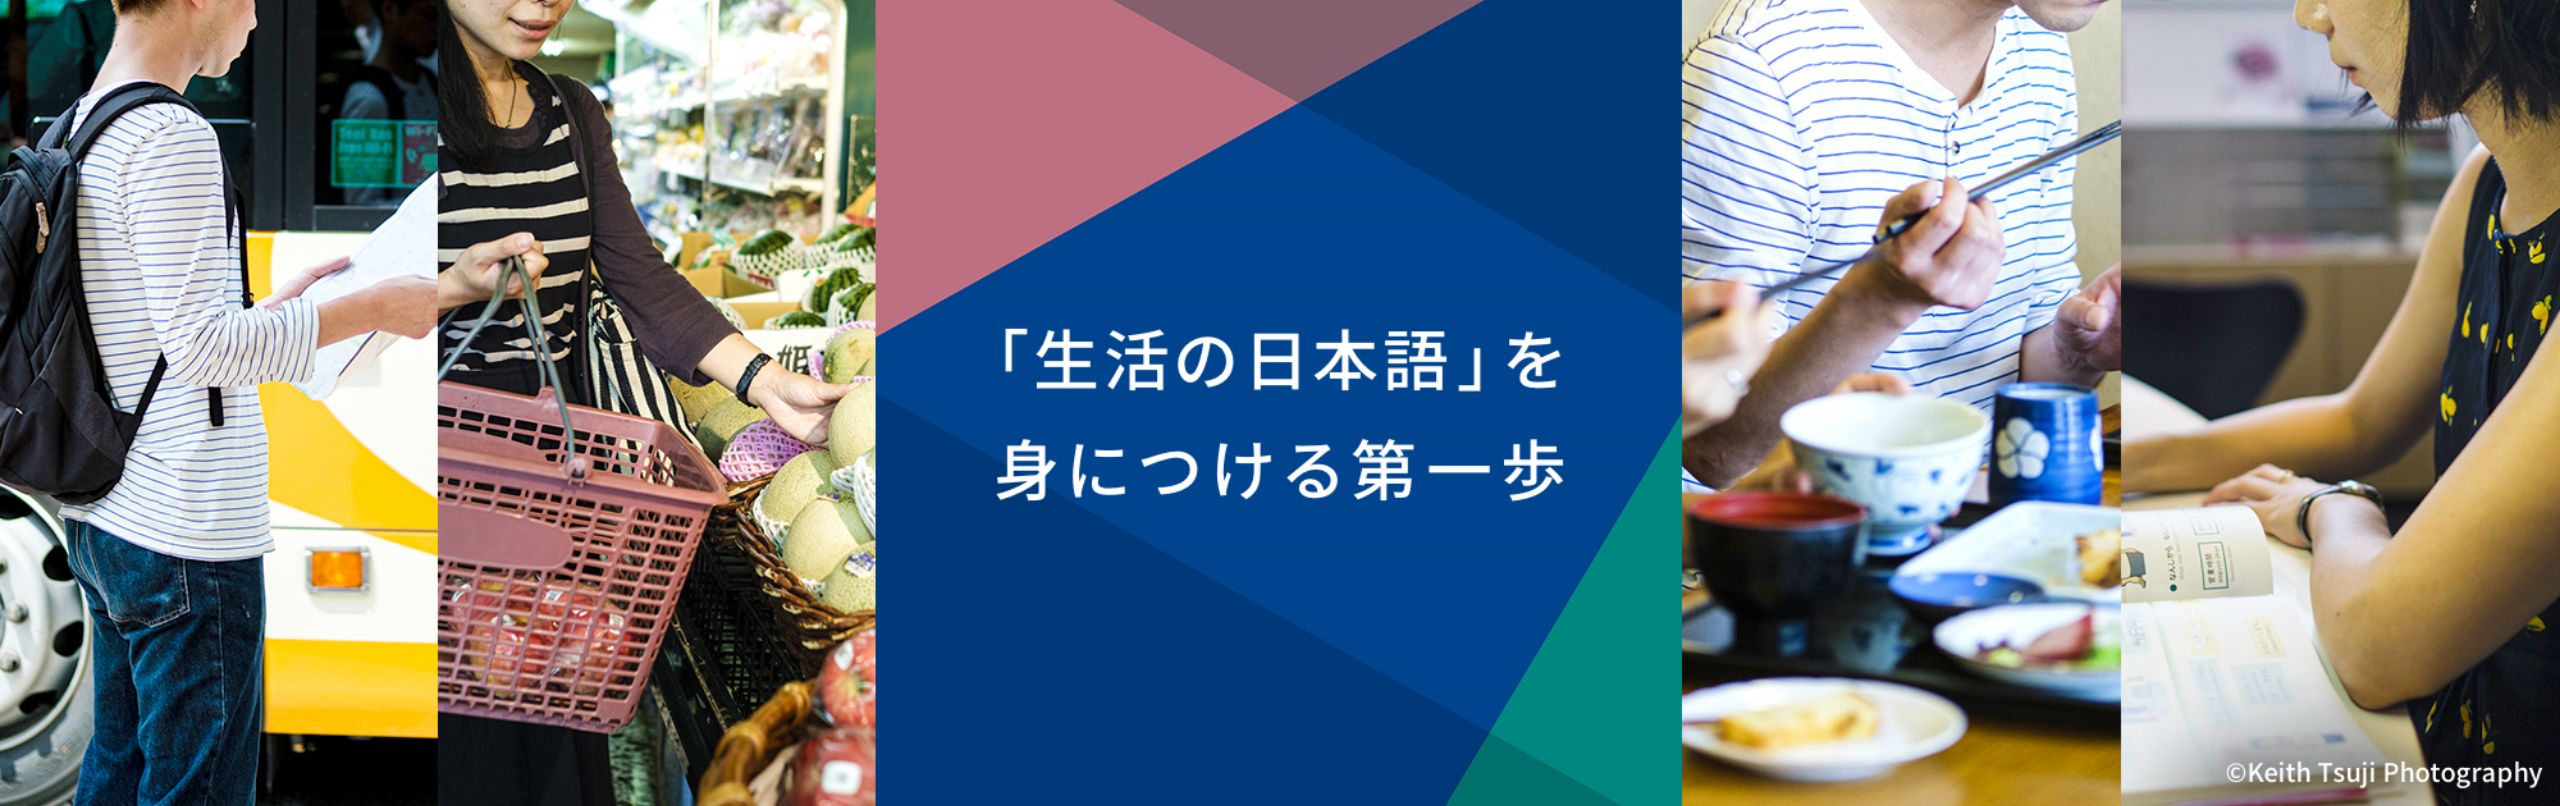 JFT-Basic 国際交流基金日本語基礎テスト 生活の日本語を身につける第一歩